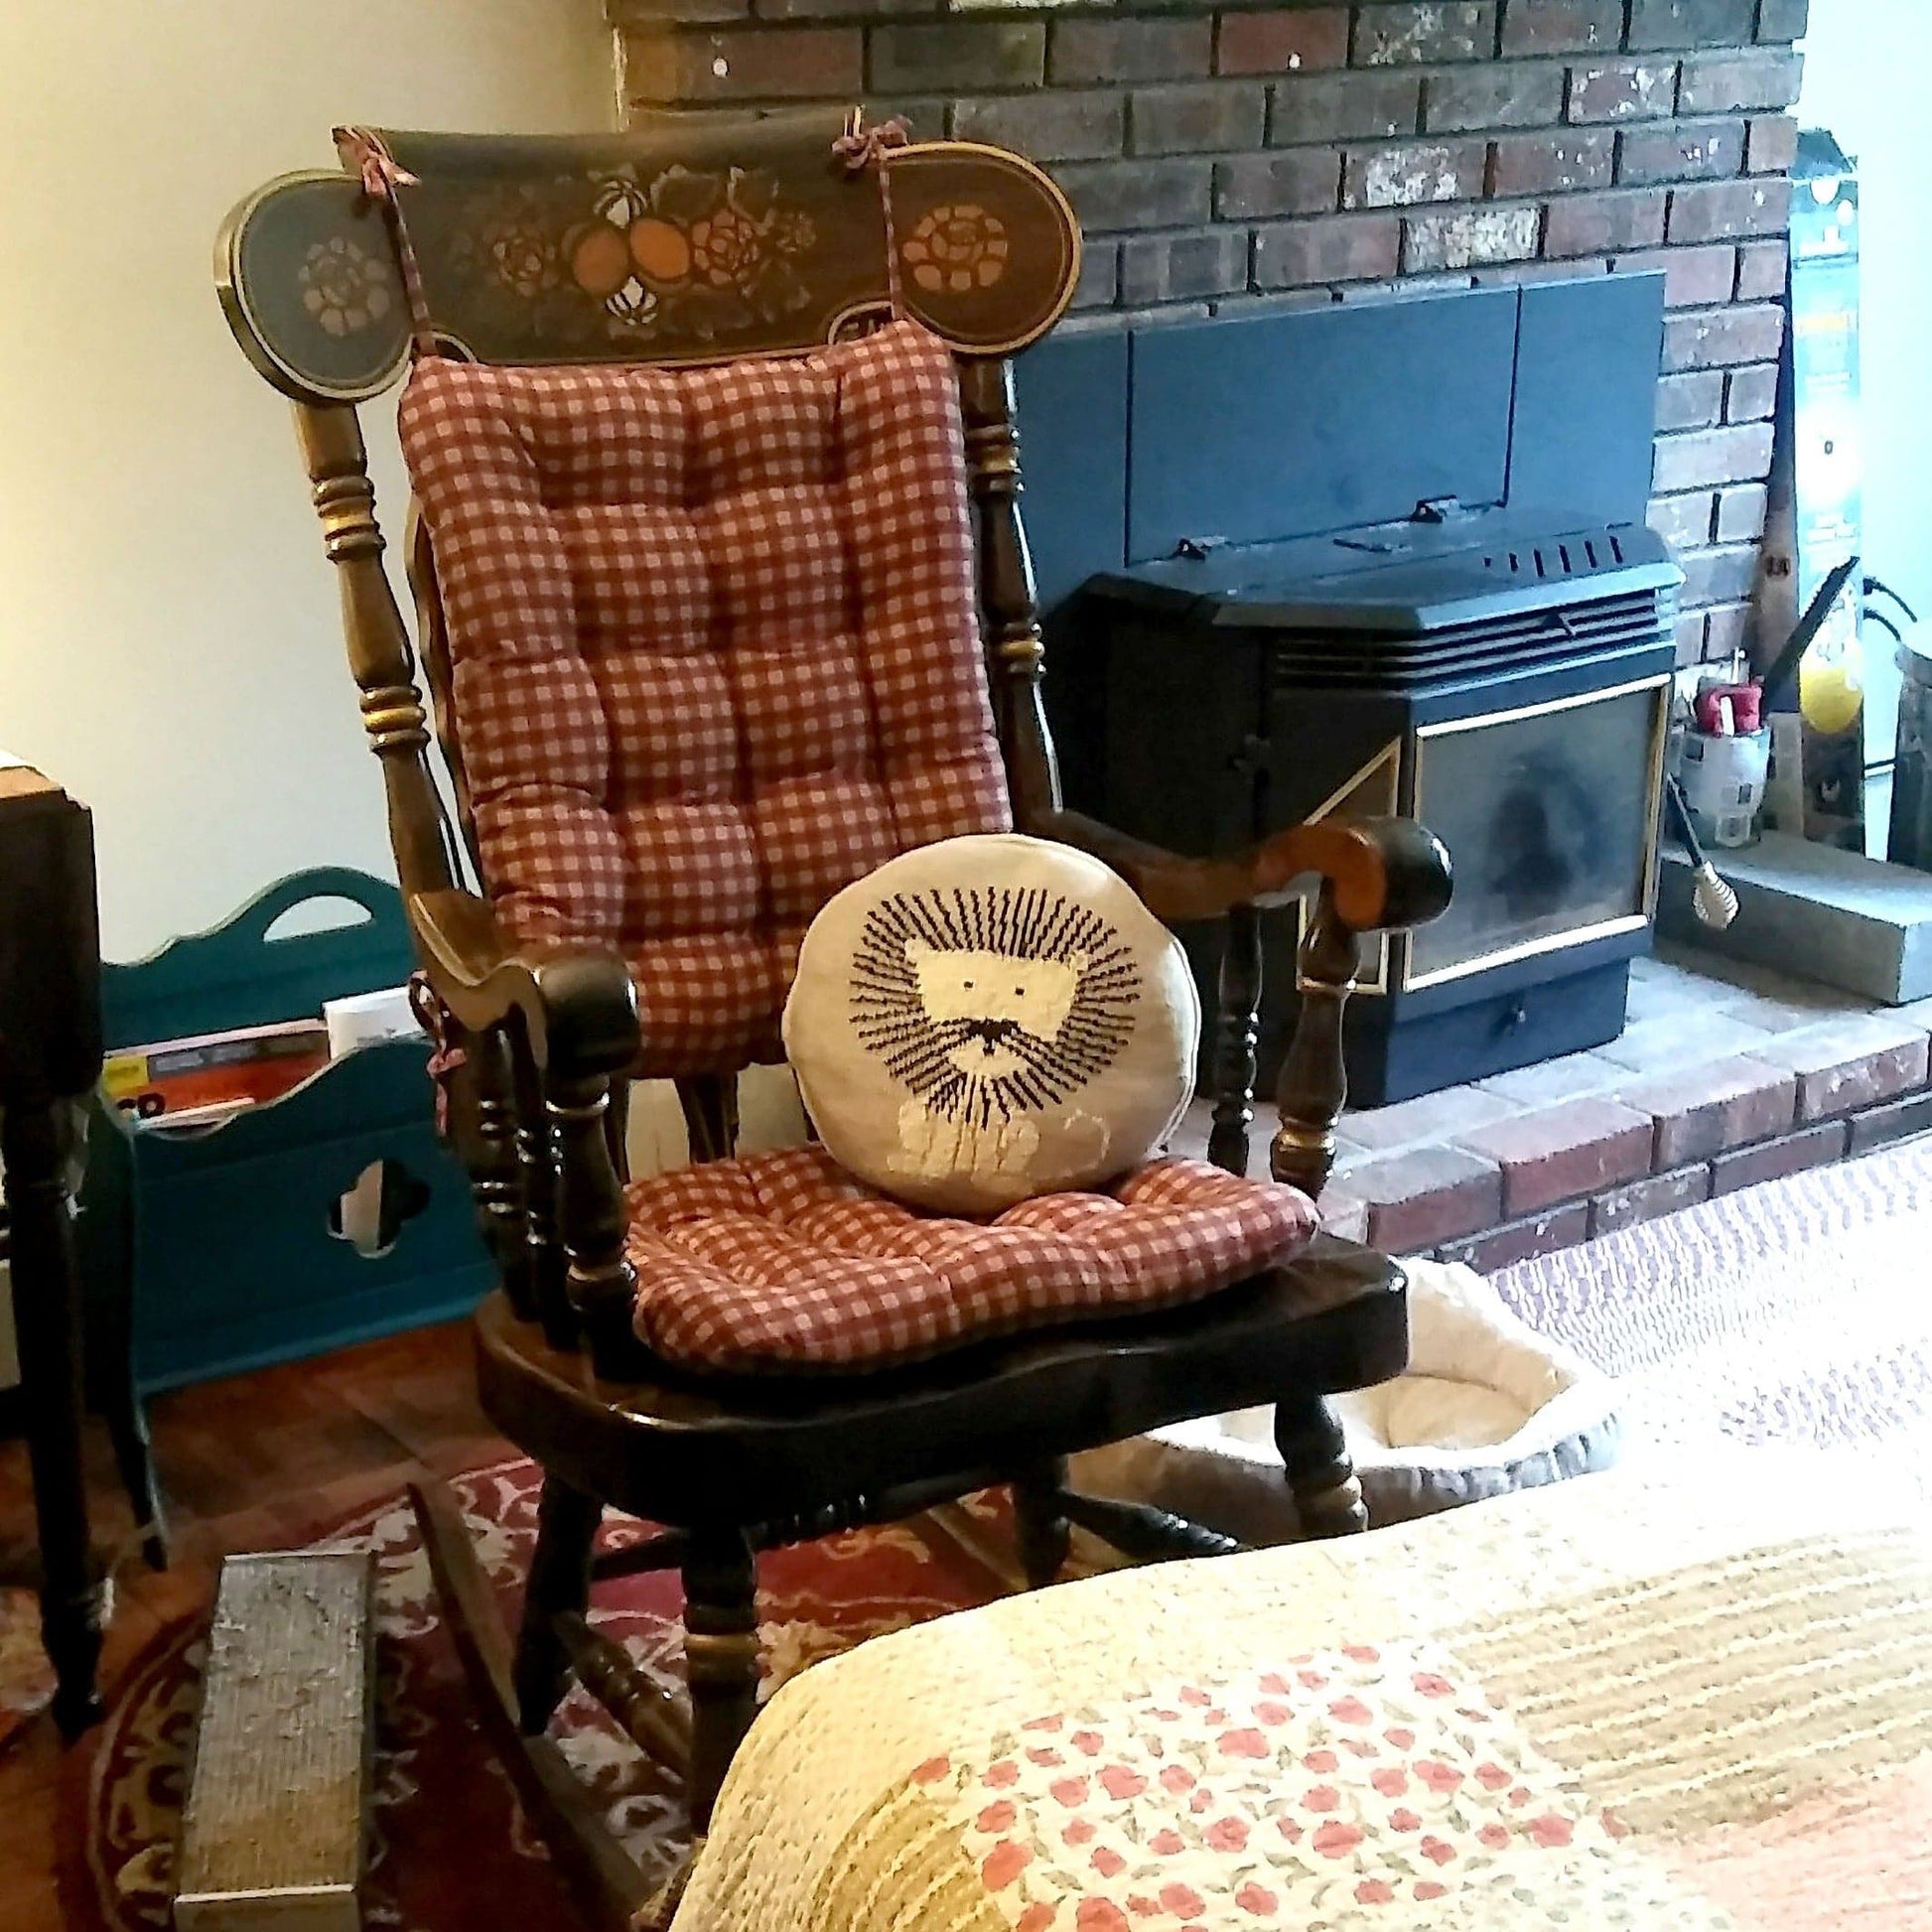 Never-Flatten Buffalo Check Rocker Chair Cushion Set, In 2 Sizes